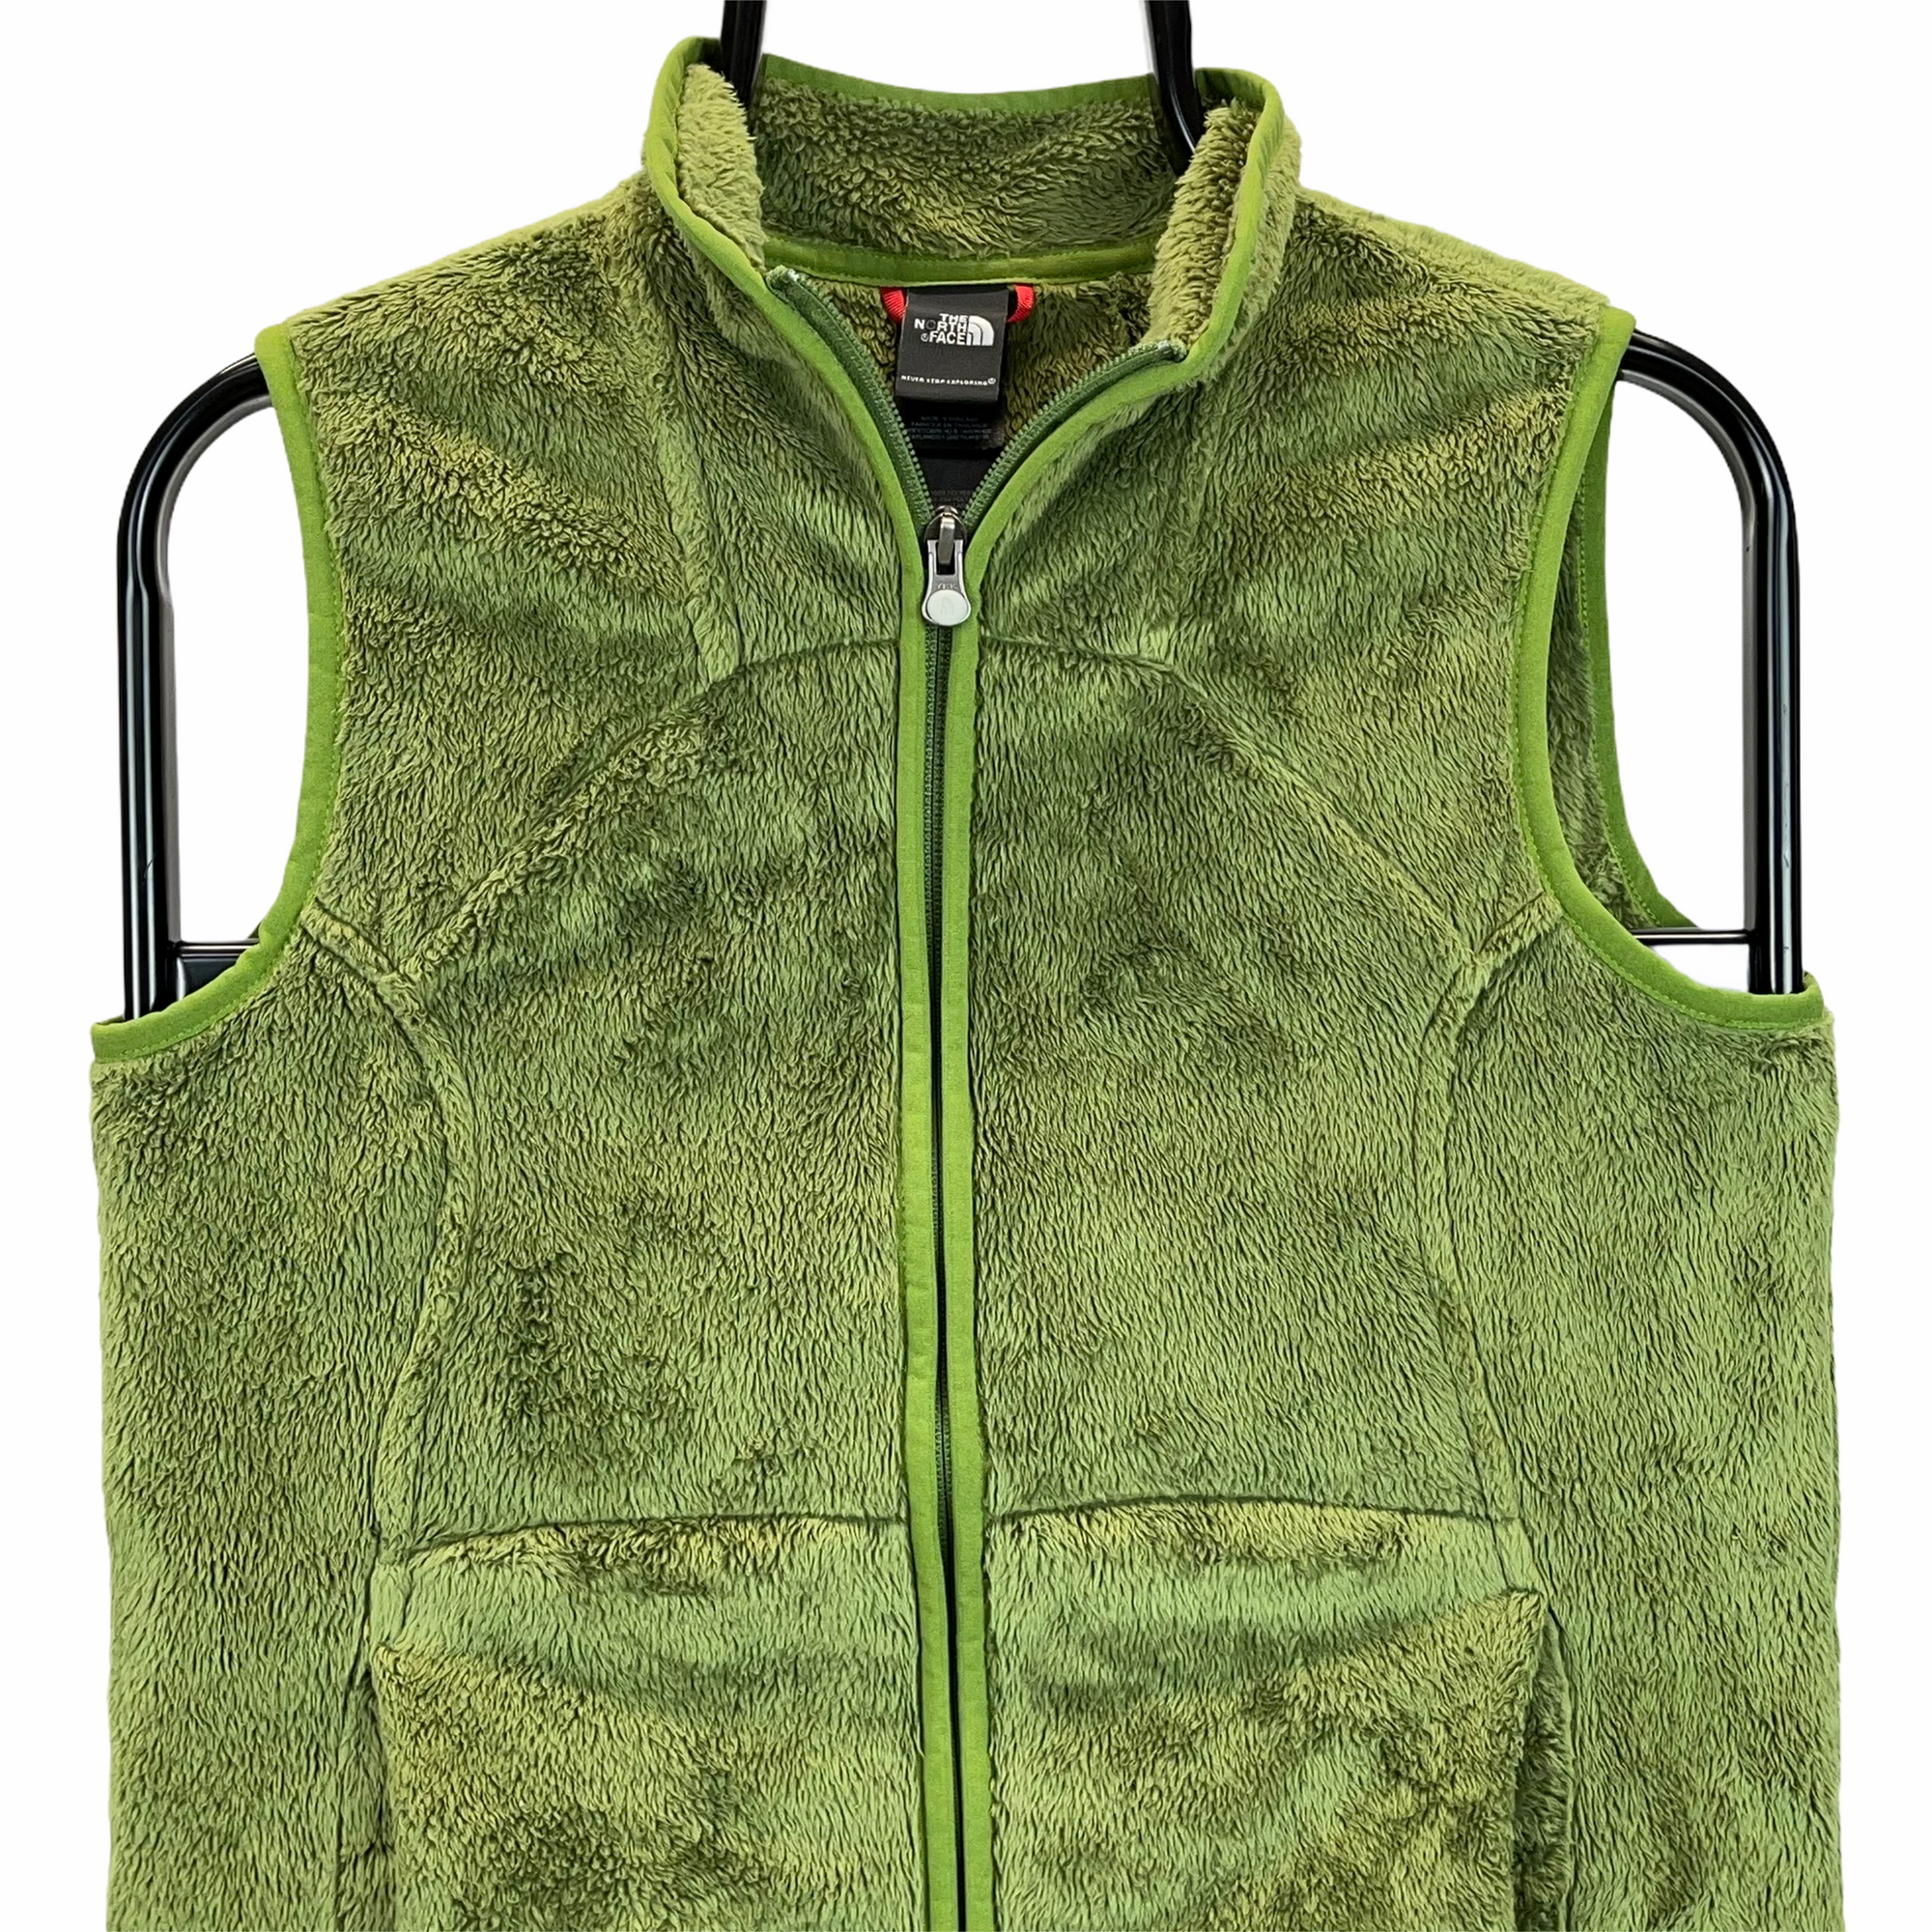 The North Face Plush Fleece in Green - Men's XS/Women's Small